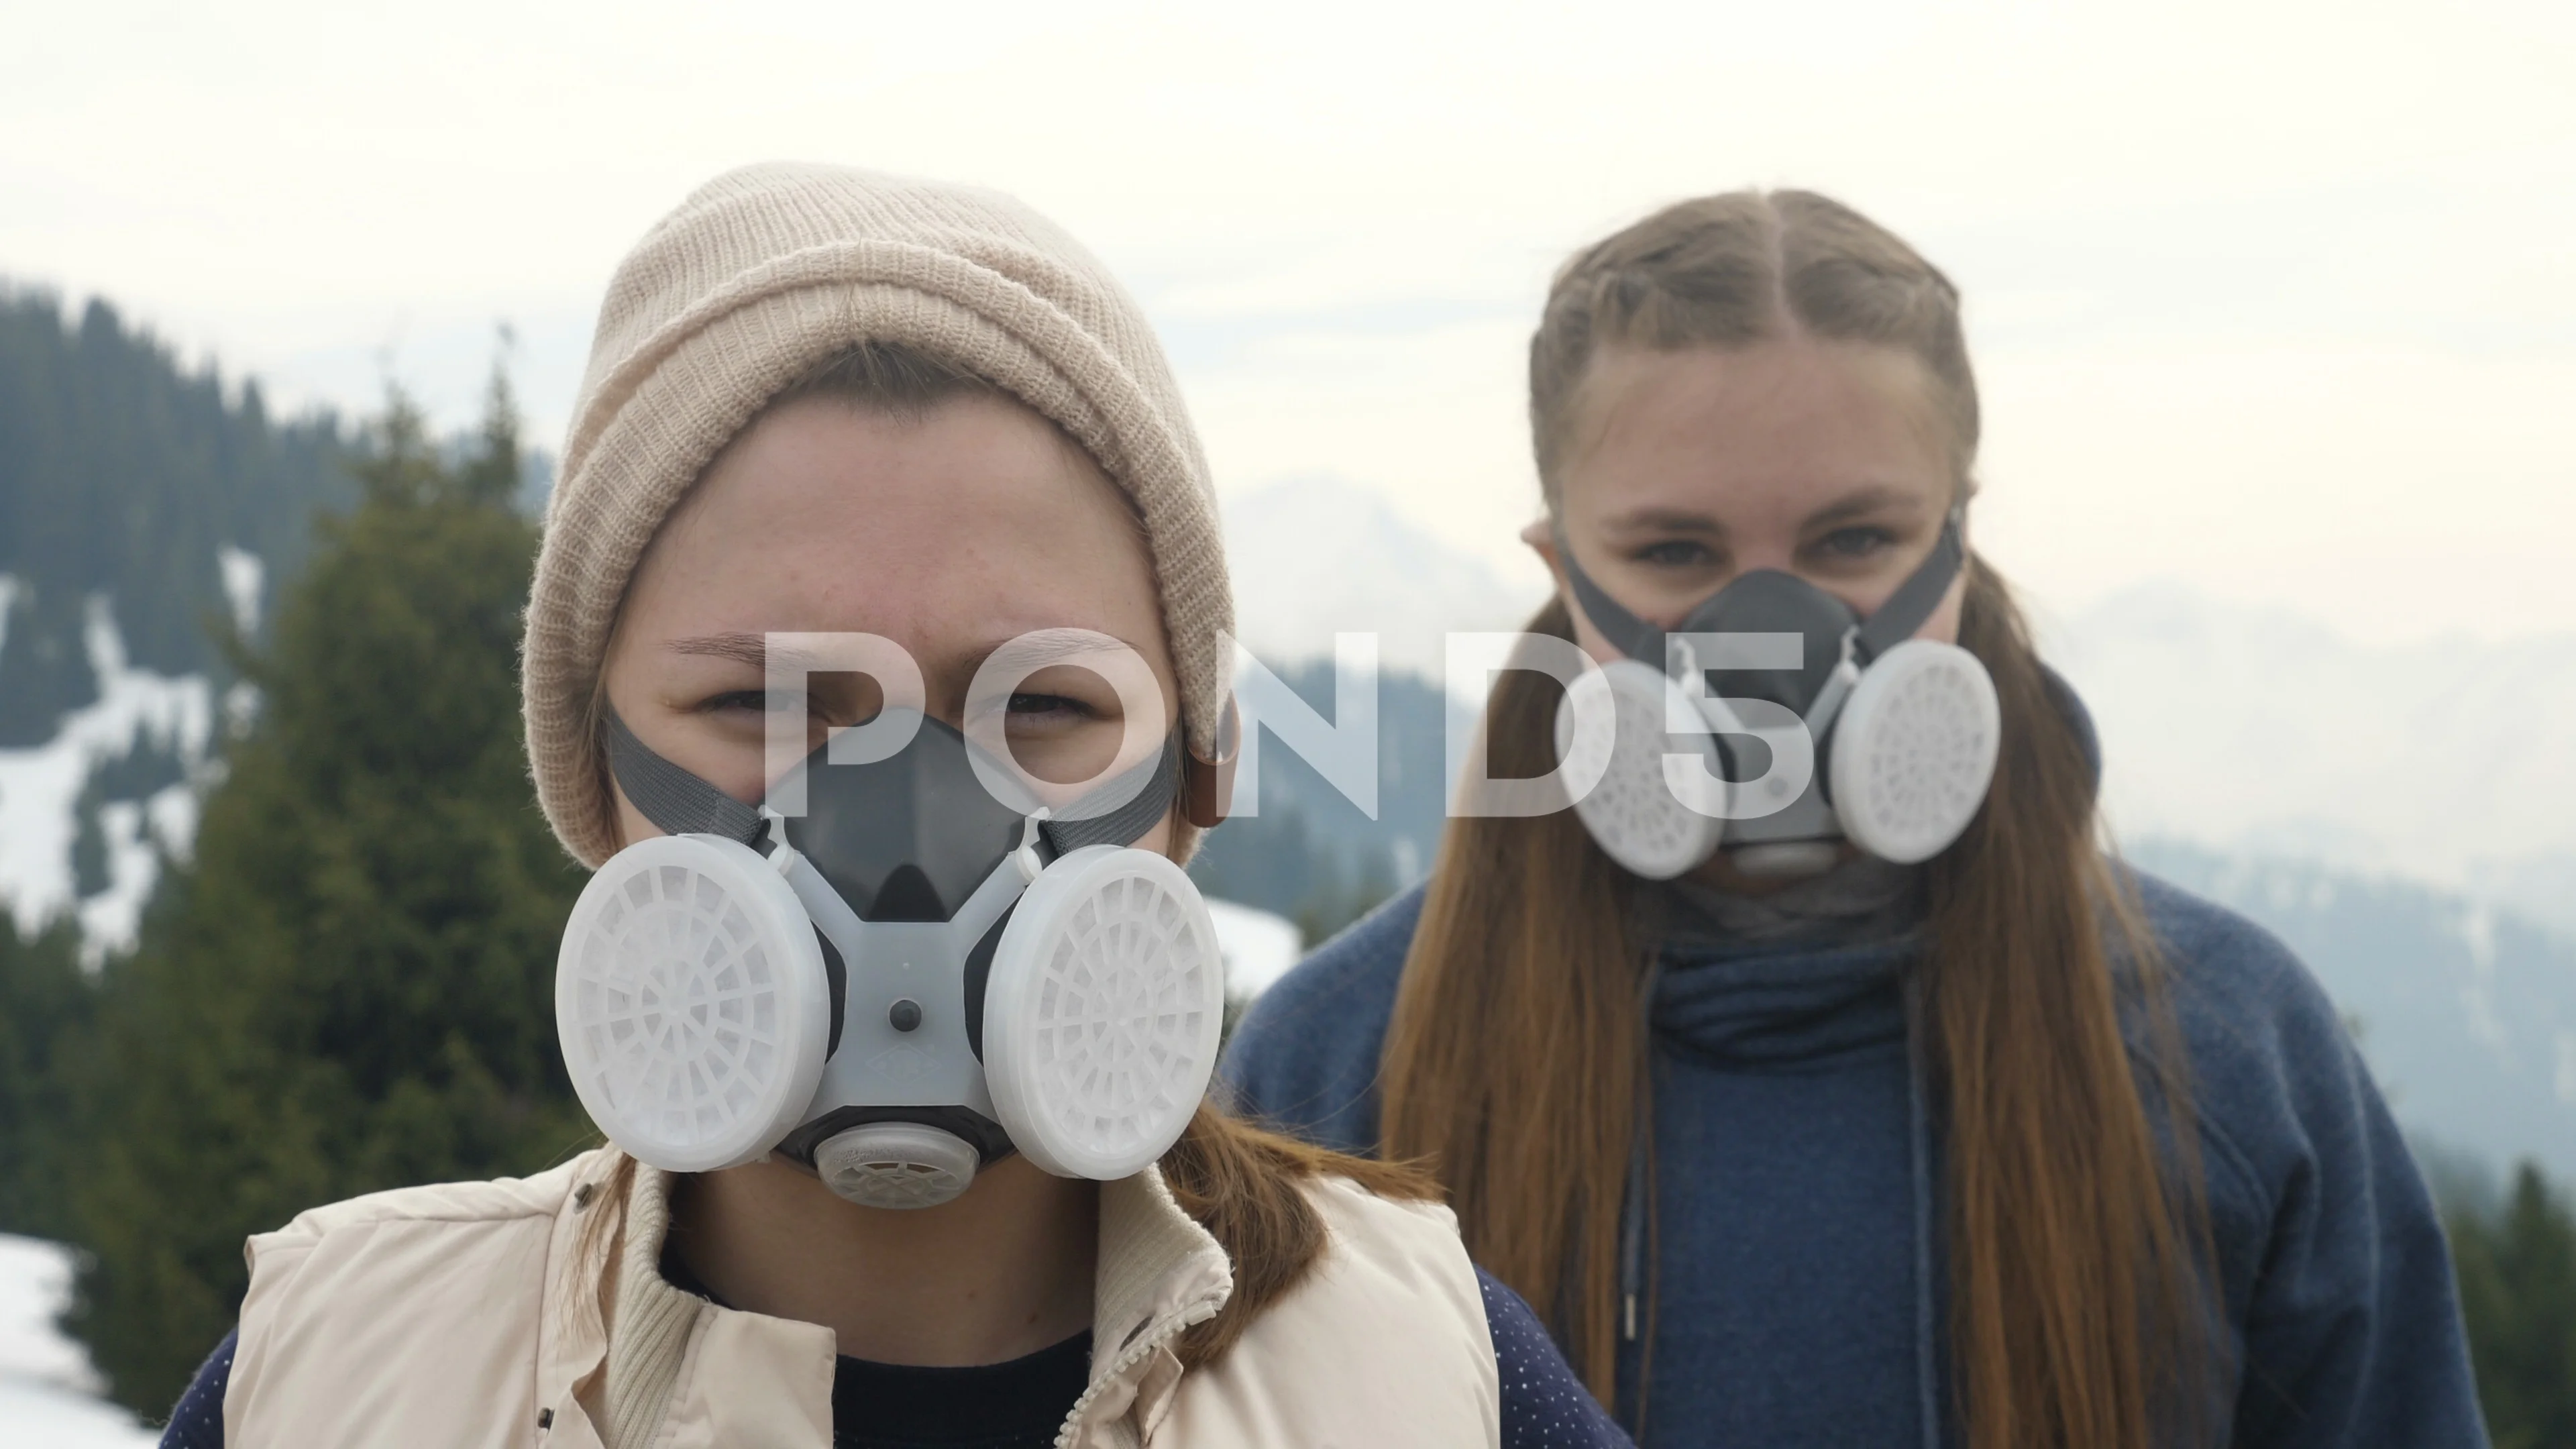 cecilia nunez share girls wearing gas masks photos